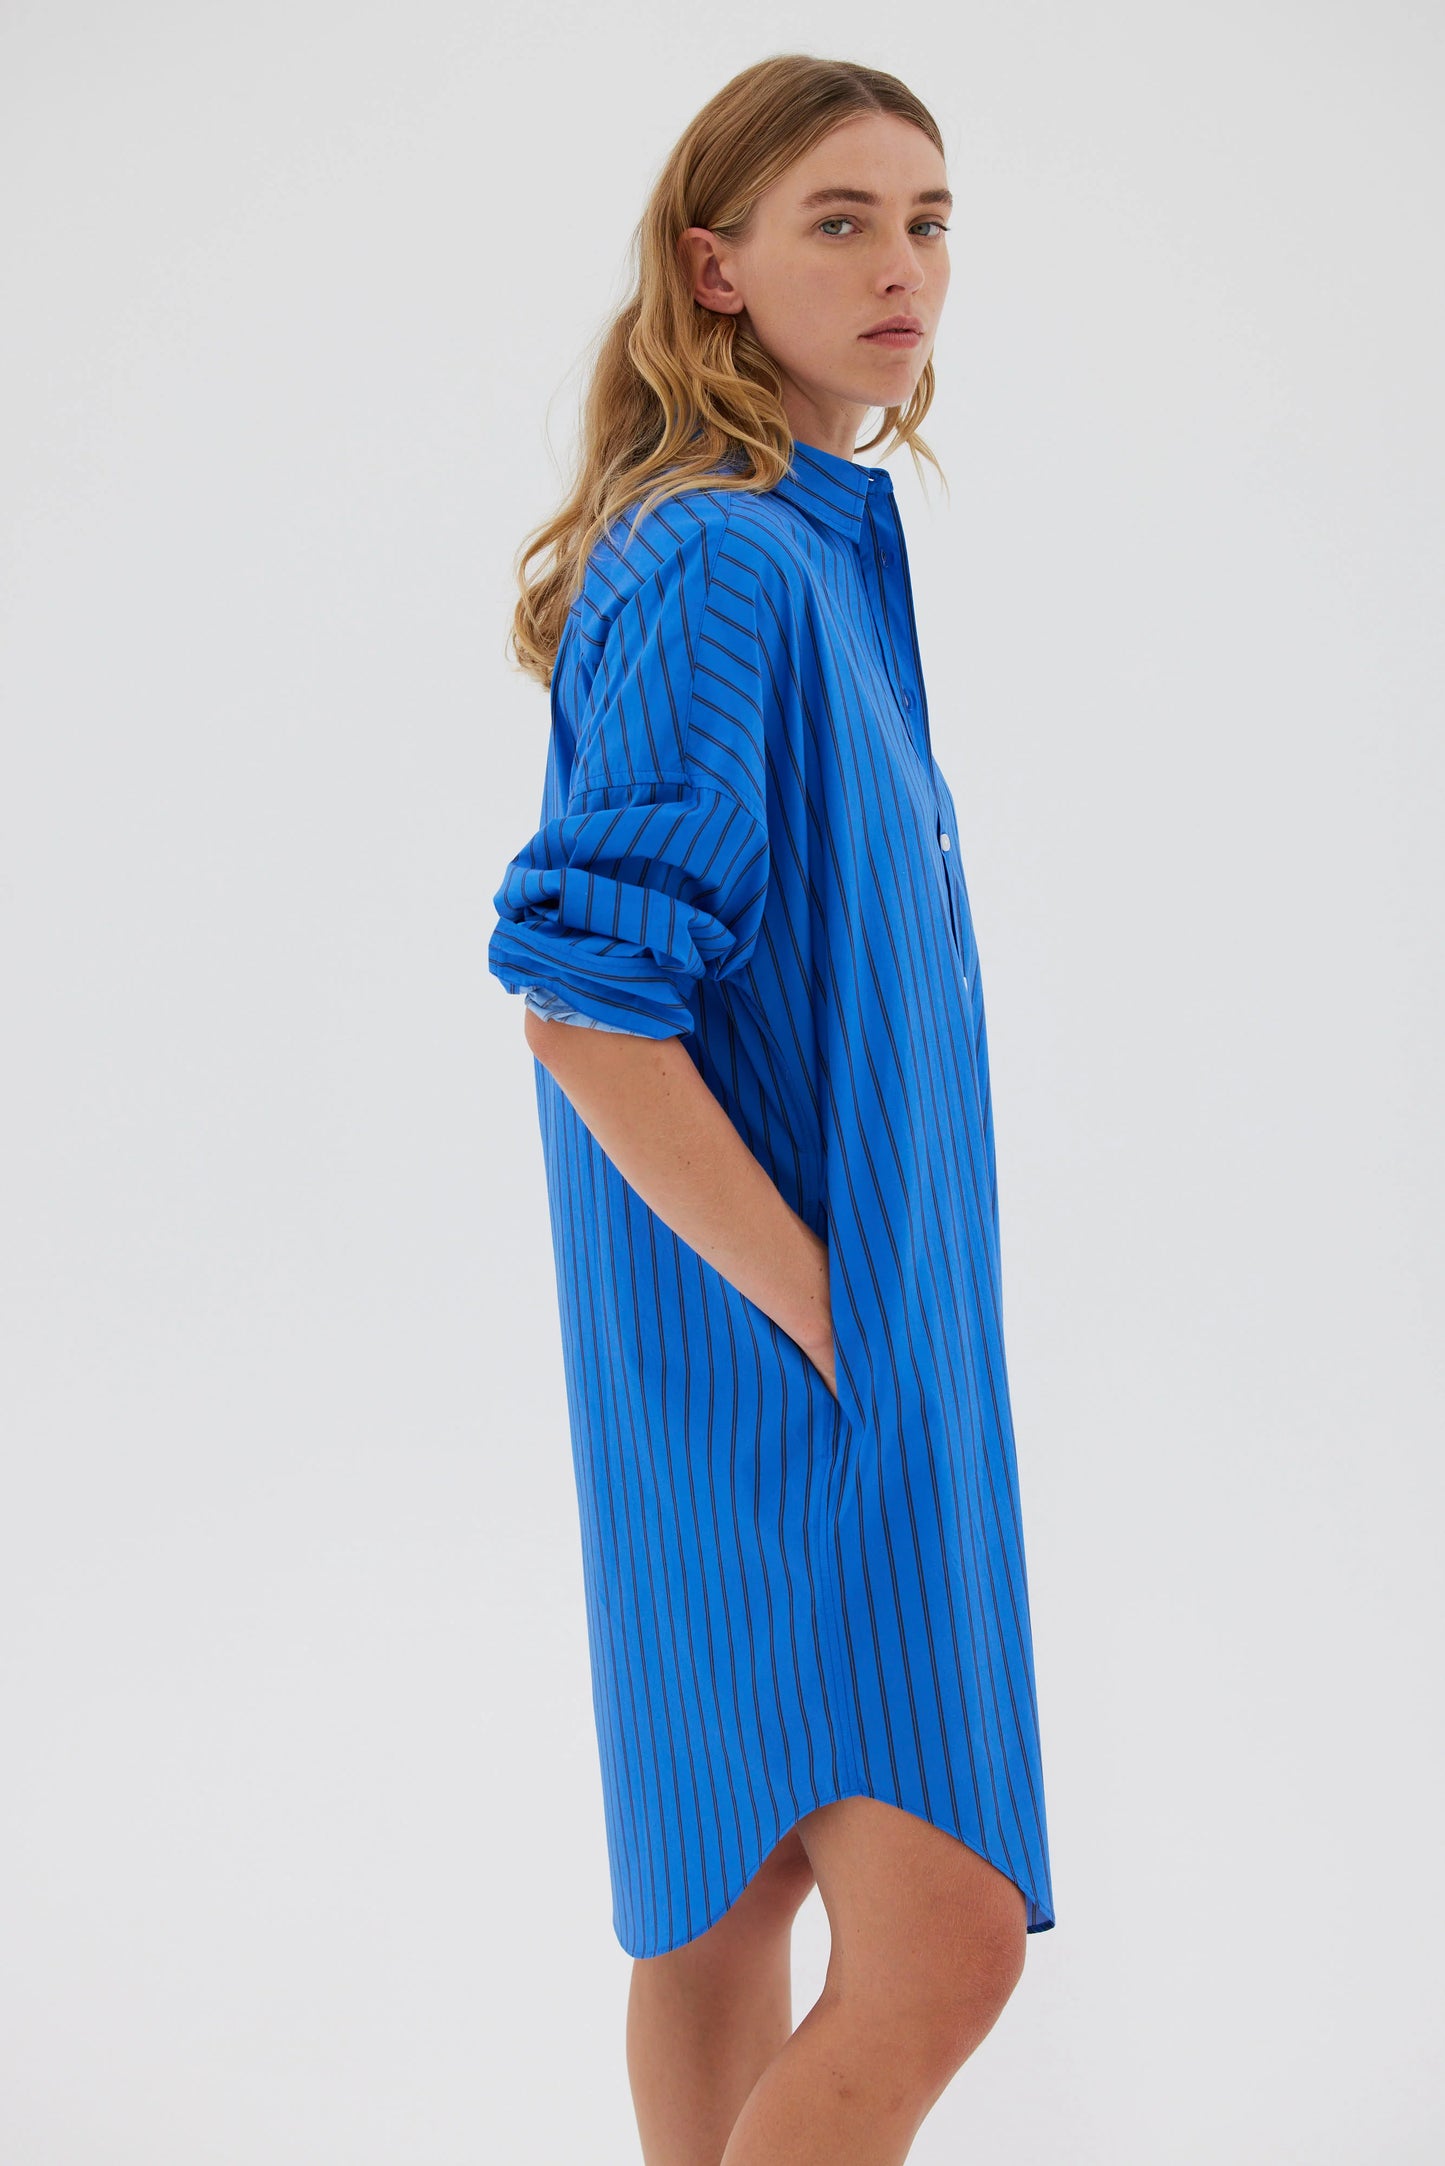 The Chiara Shirt Dress in Ink Blue & Black Stripe